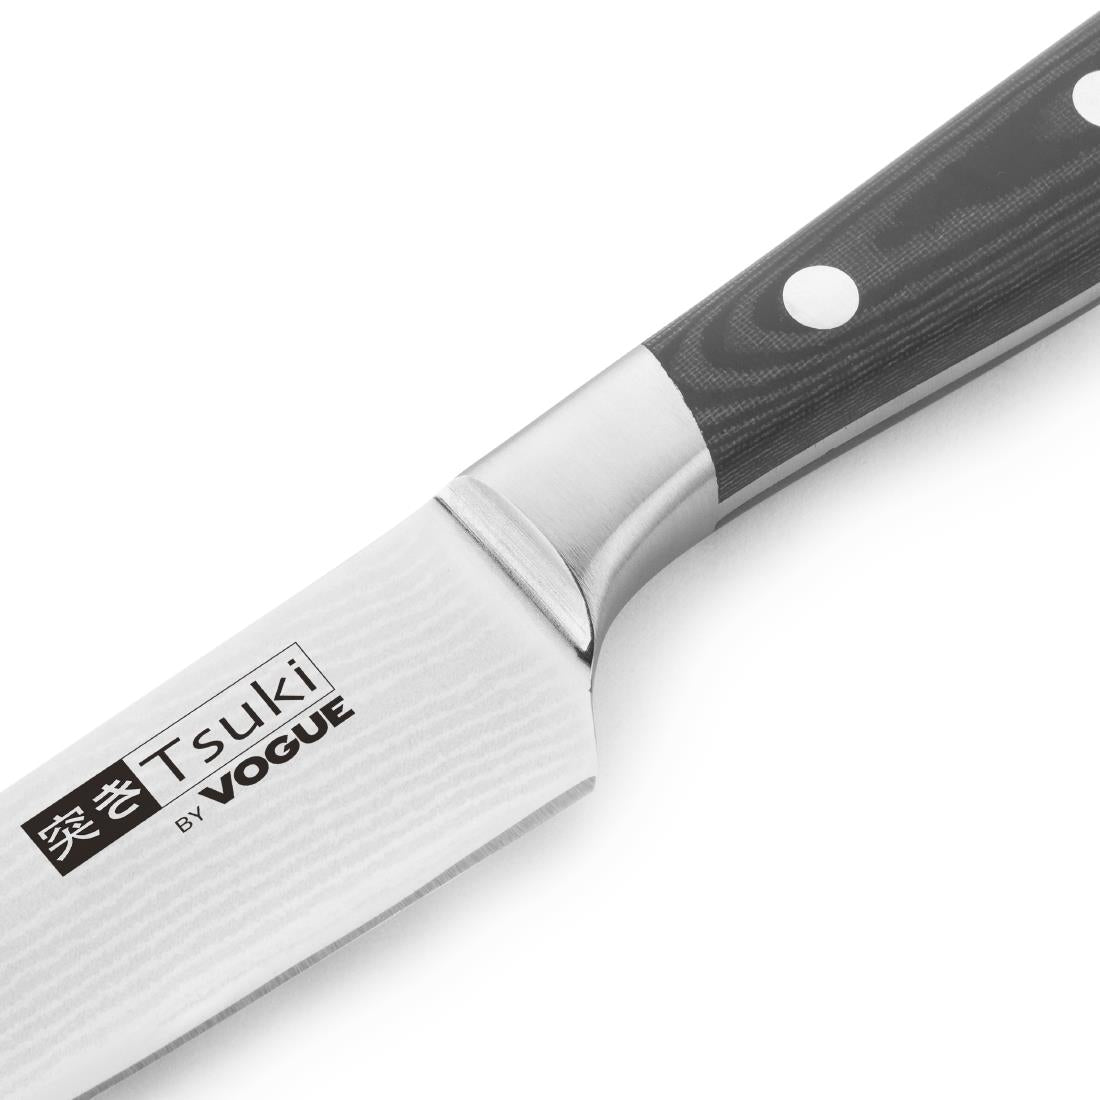 Tsuki Series 7 Utility Knife 12.5cm